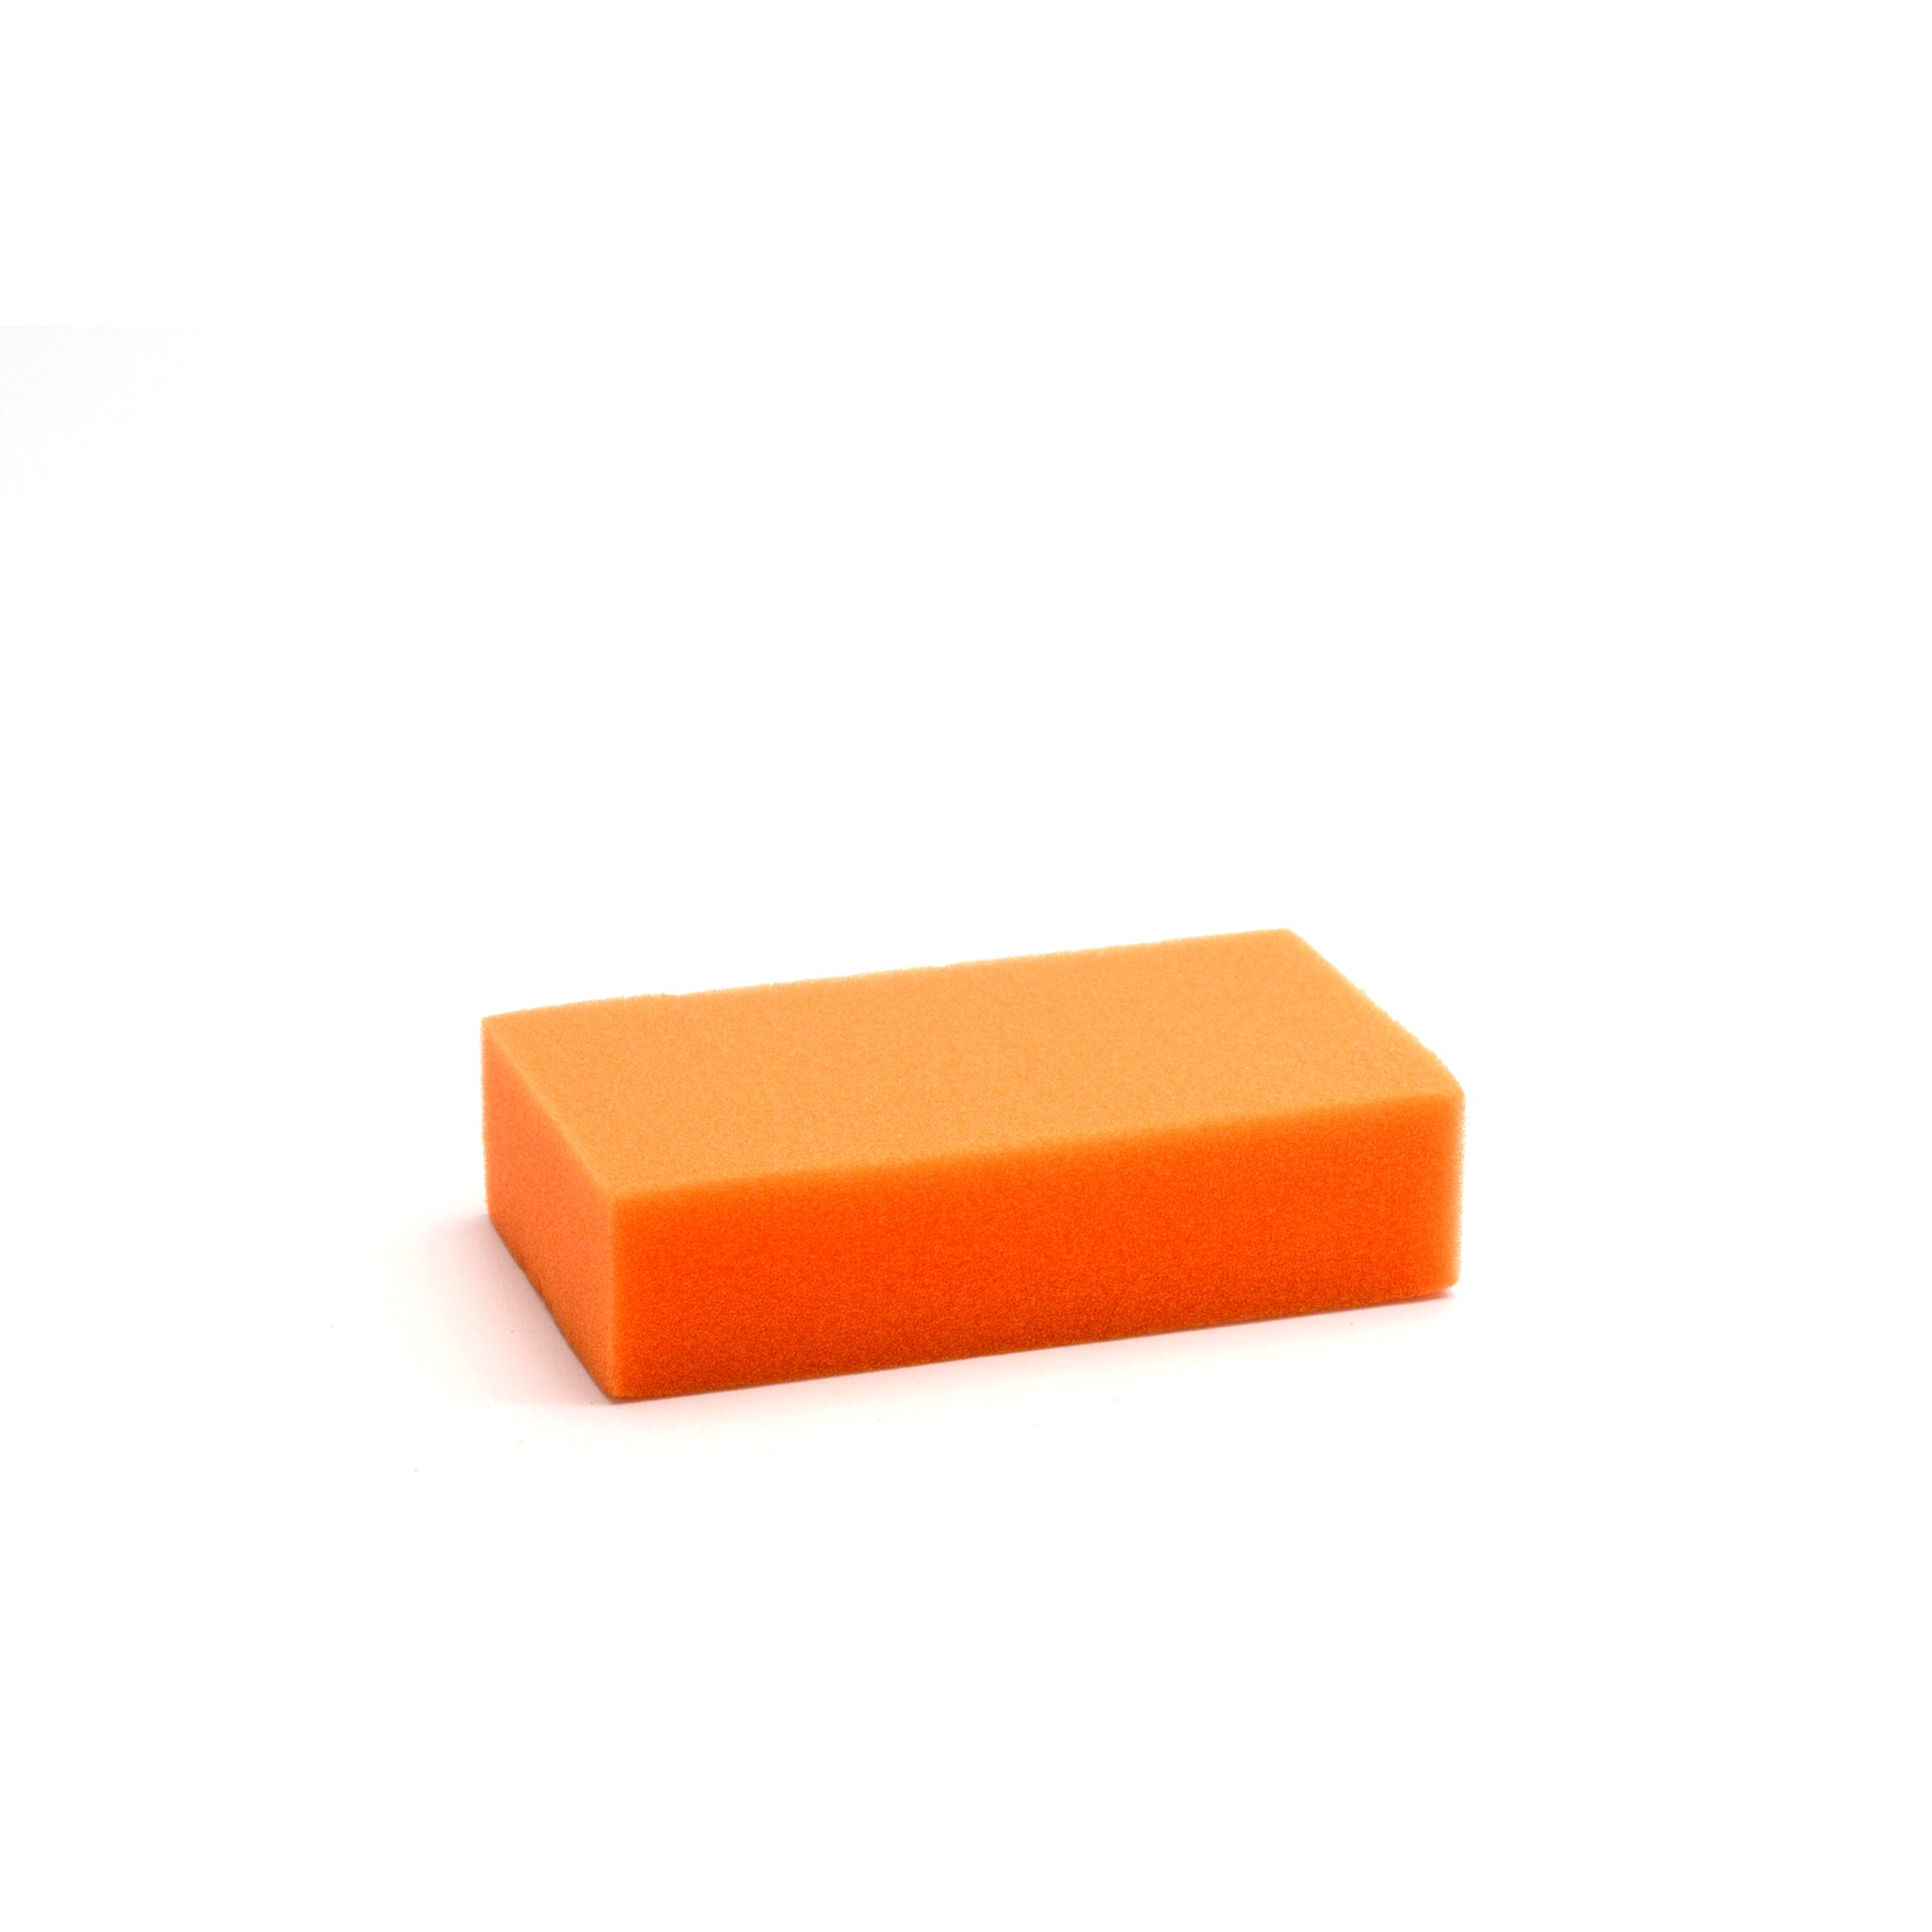 Pro High Density Sponge from Identity Leathercraft